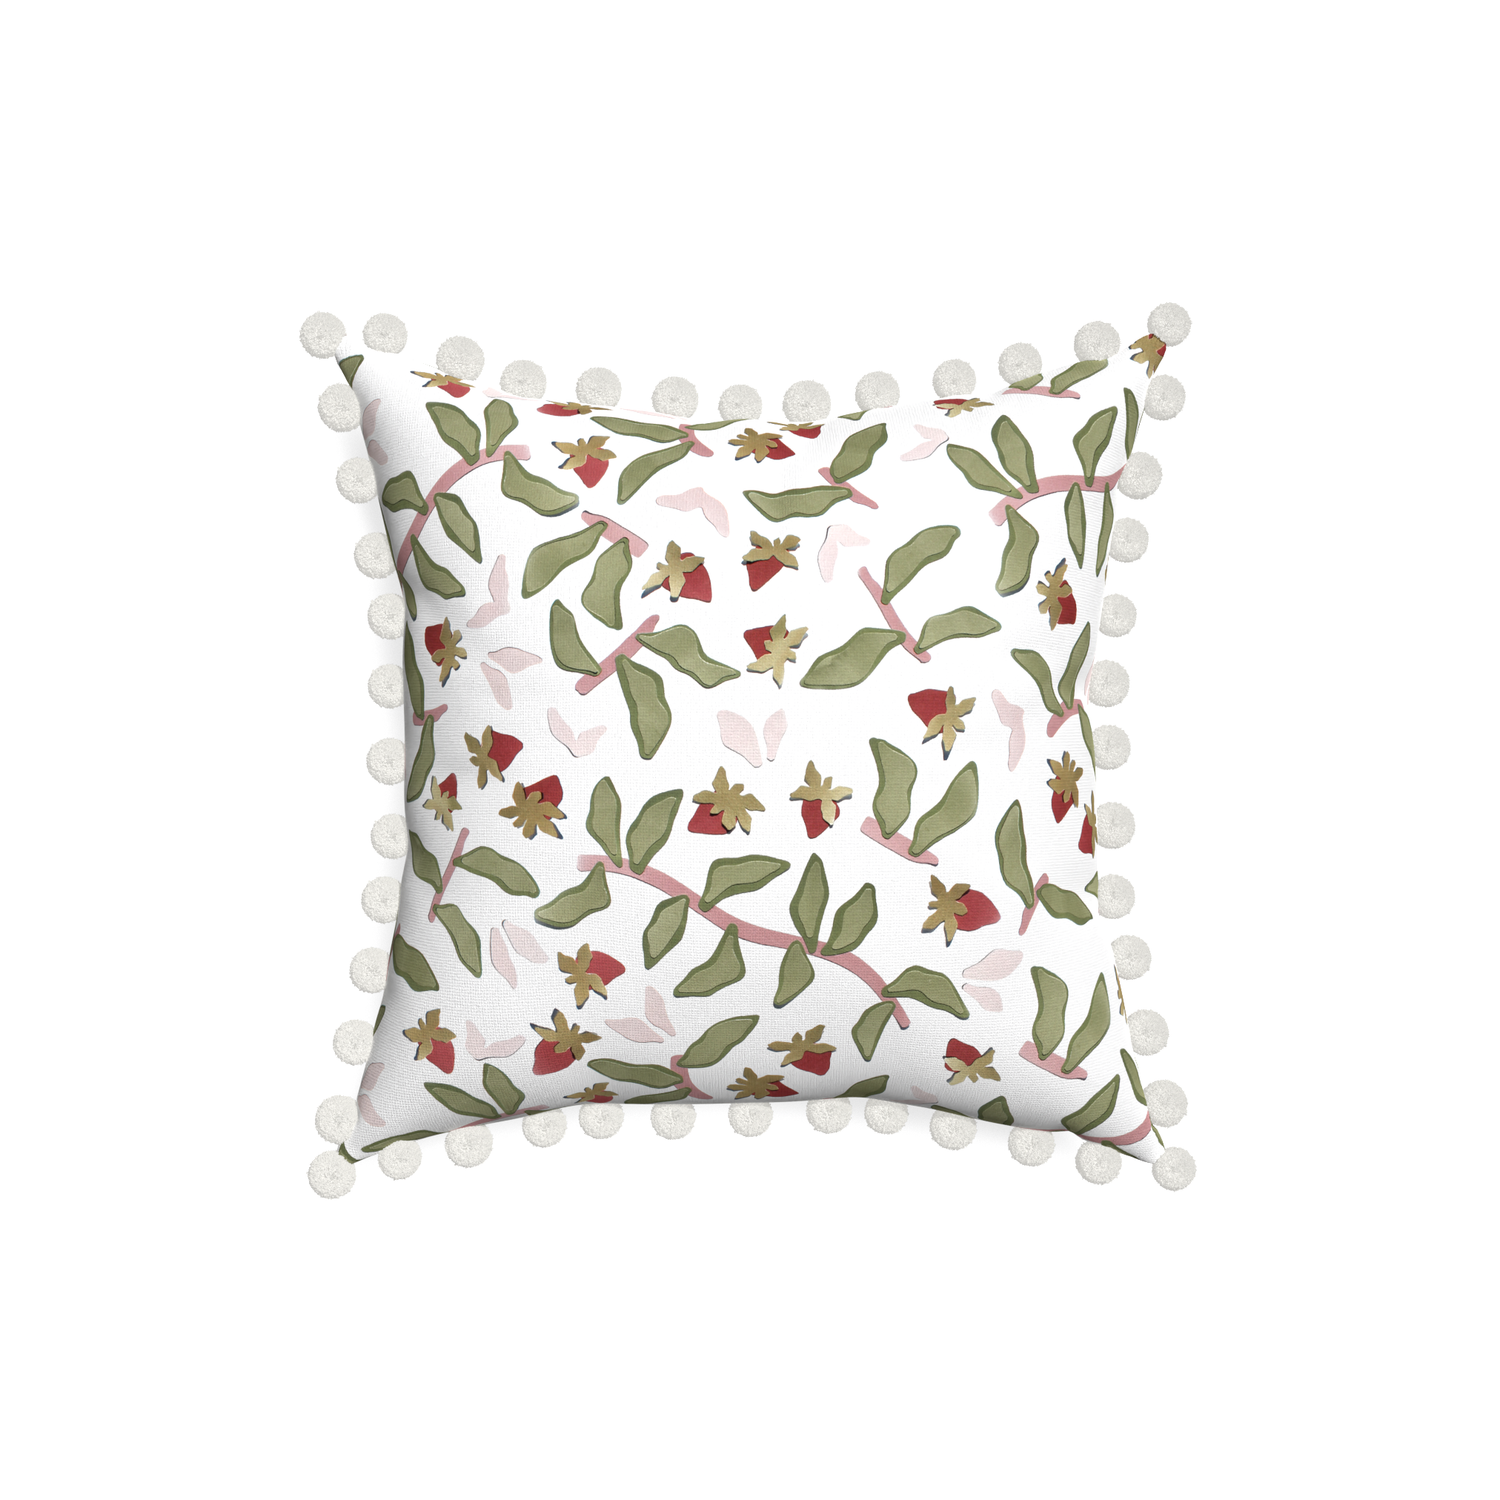 18-square nellie custom pillow with snow pom pom on white background